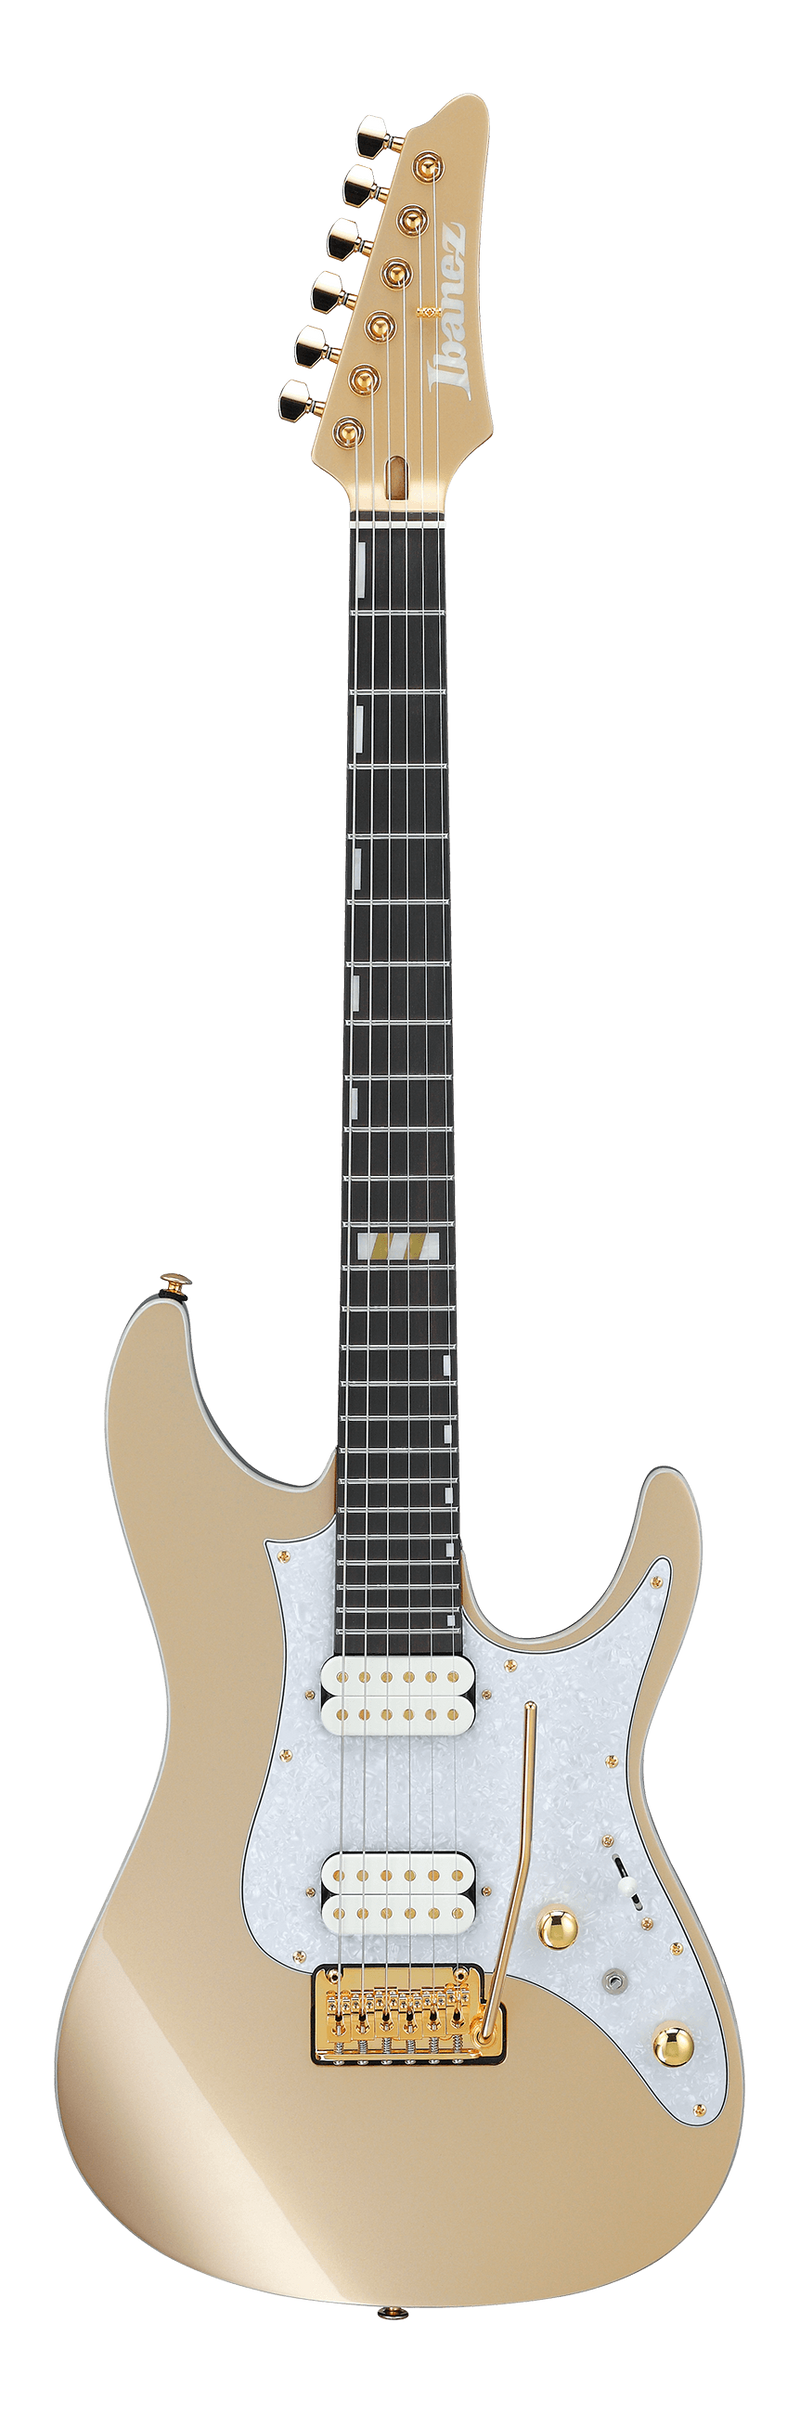 Ibanez Krys10 Scott LePage Signature Electric Guitar (Gold)